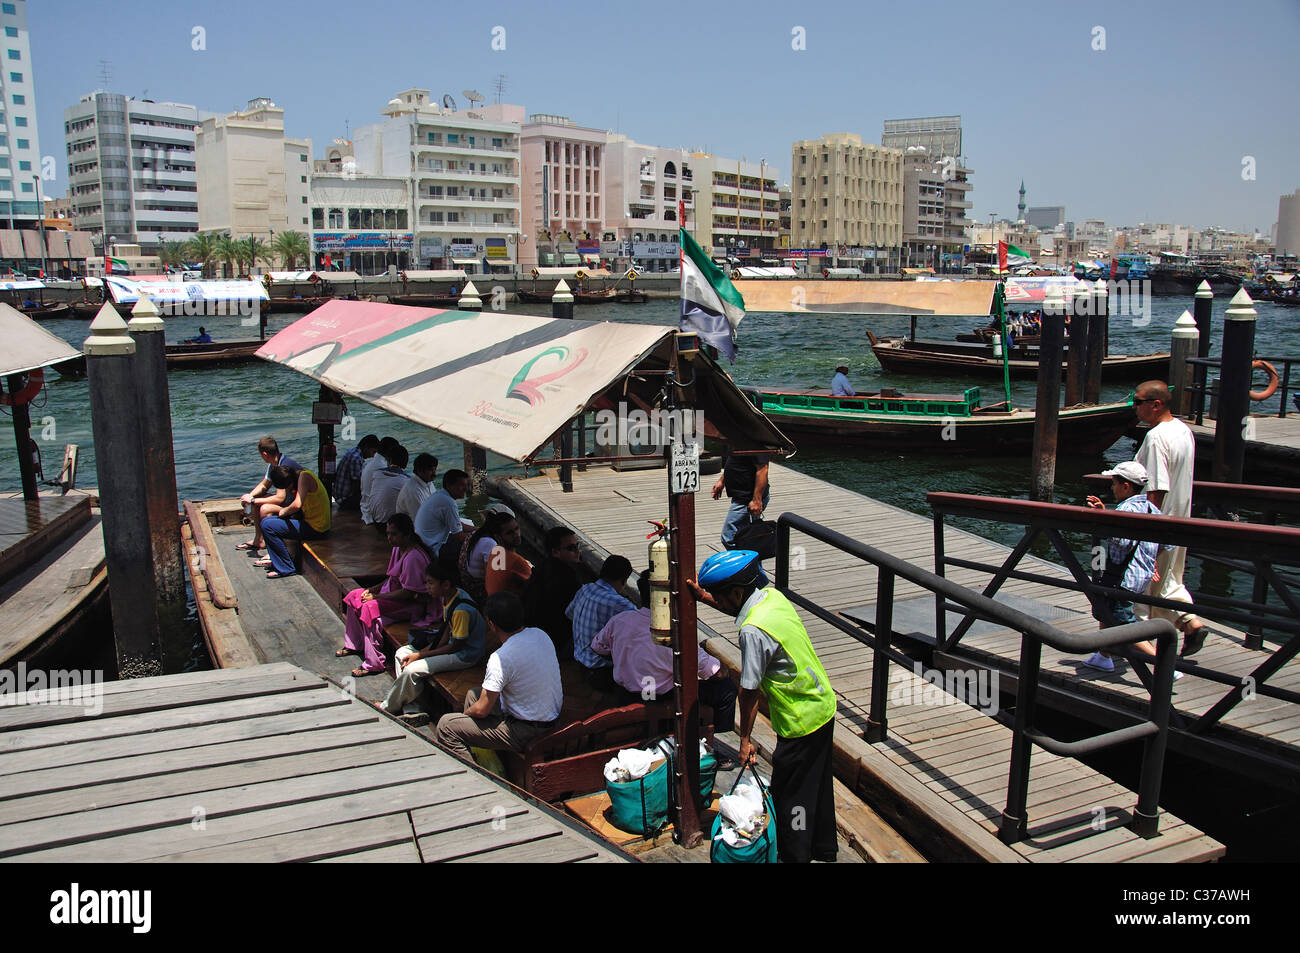 Arab dhow boats at Old Souk Station, Bur Dubai, Dubai, United Arab Emirates Stock Photo